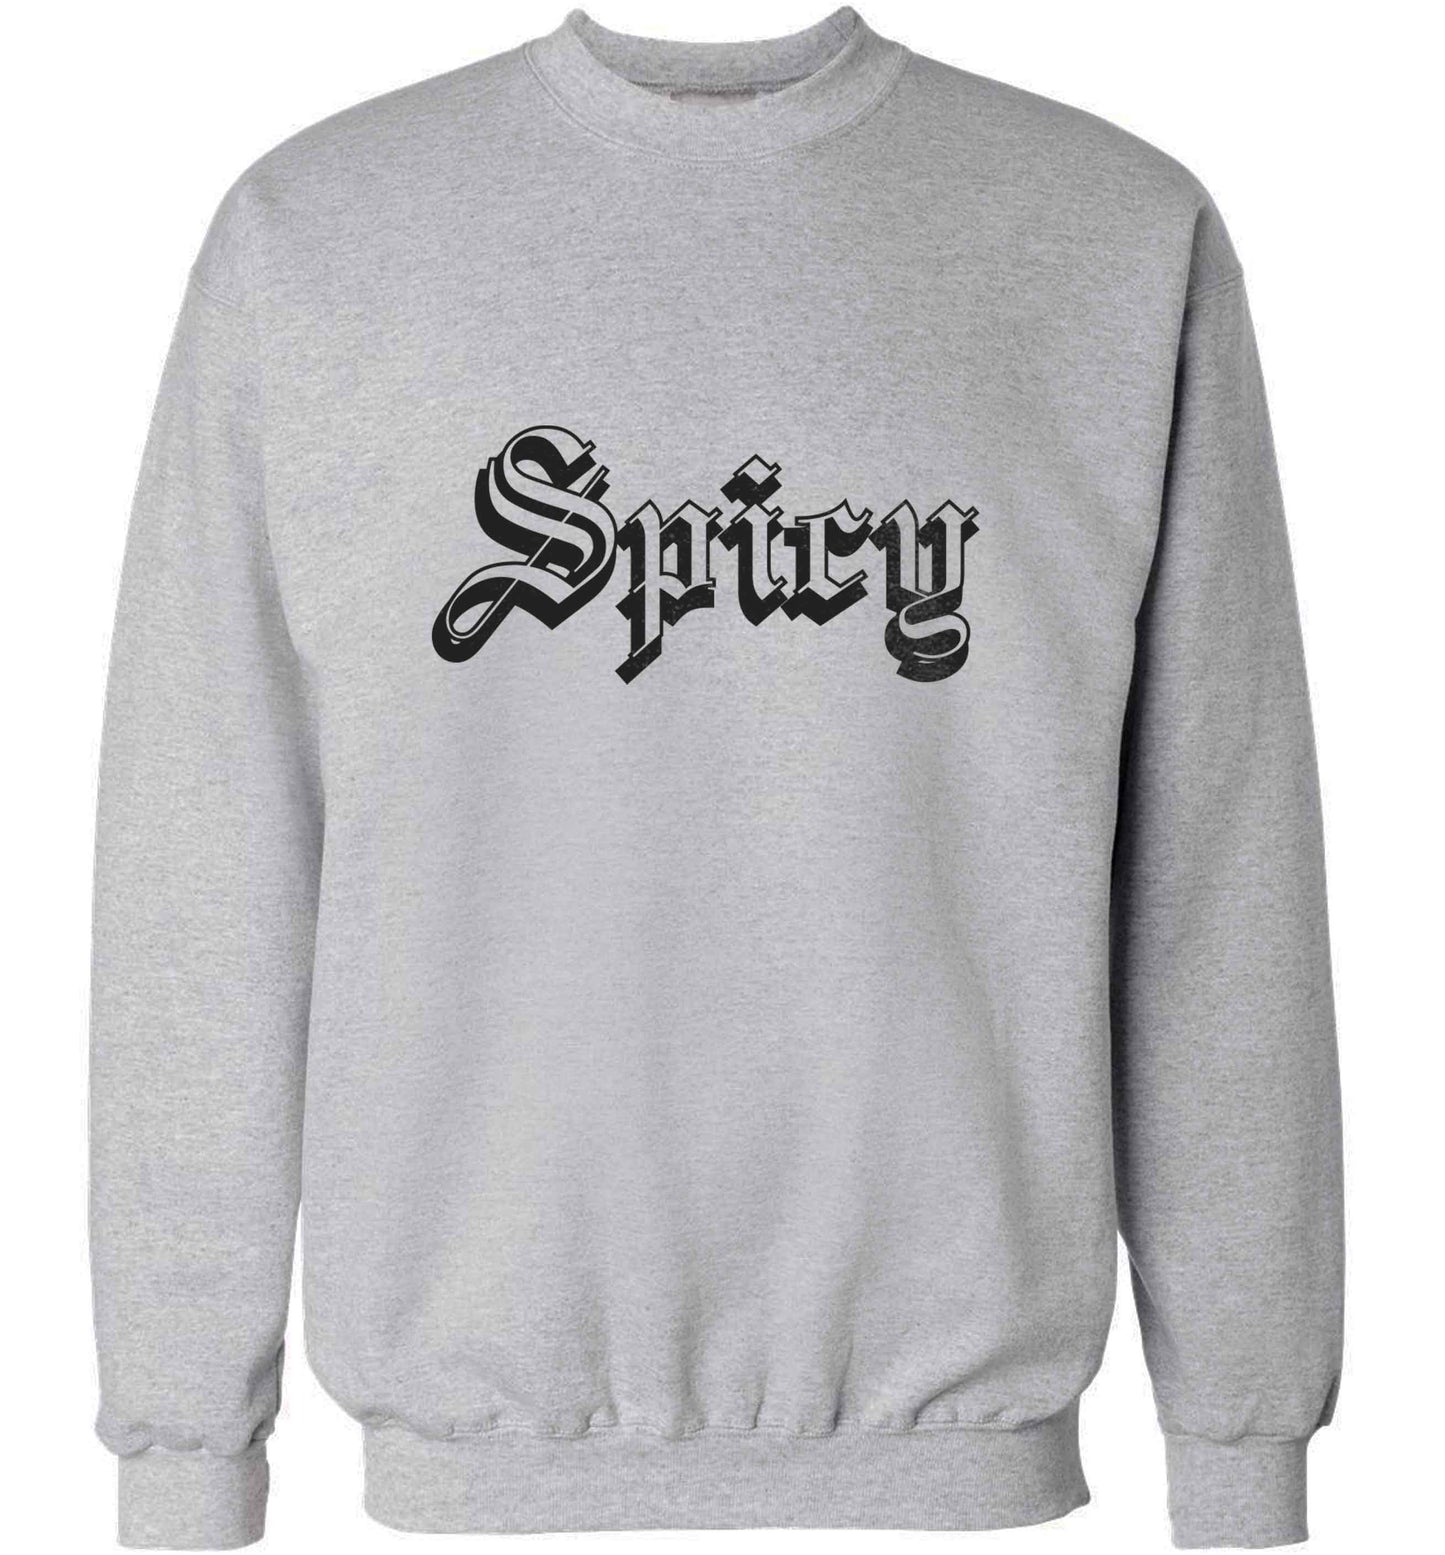 Spicy adult's unisex grey sweater 2XL